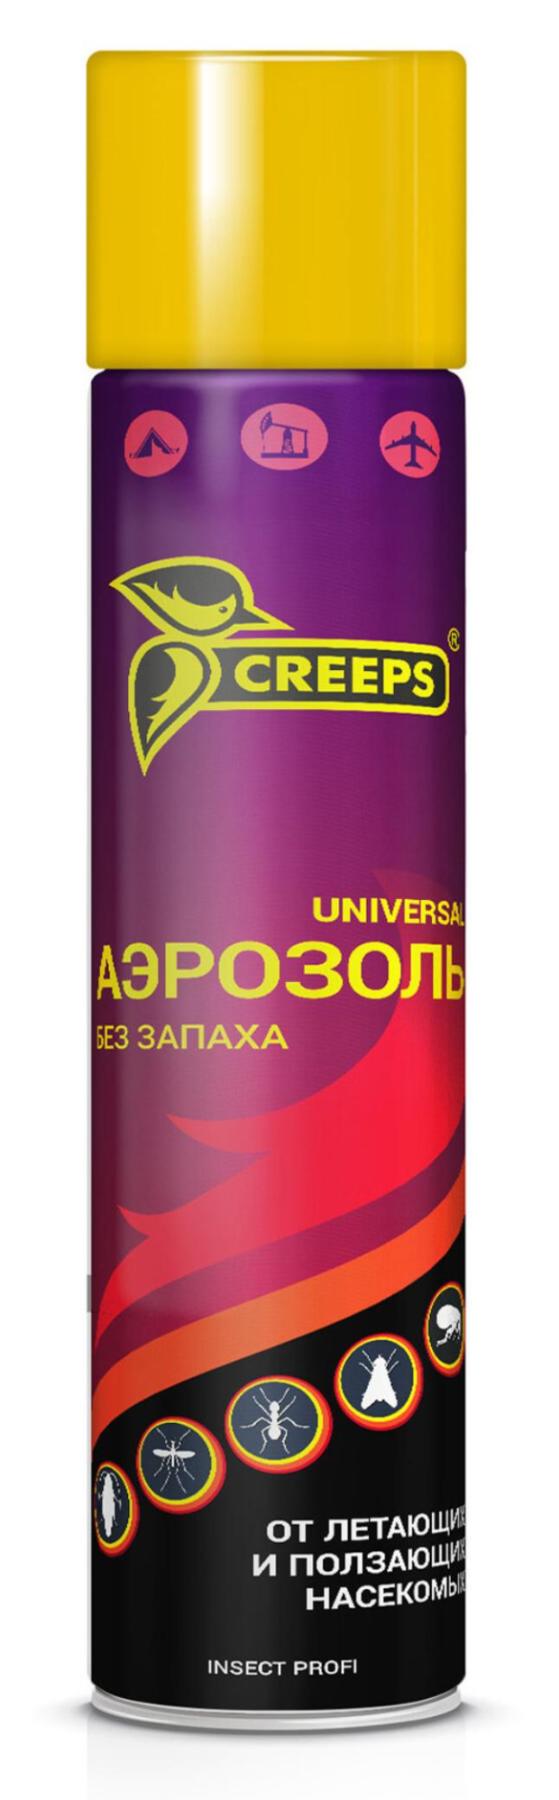 Аэрозоль  CREEPS universal, 400мл